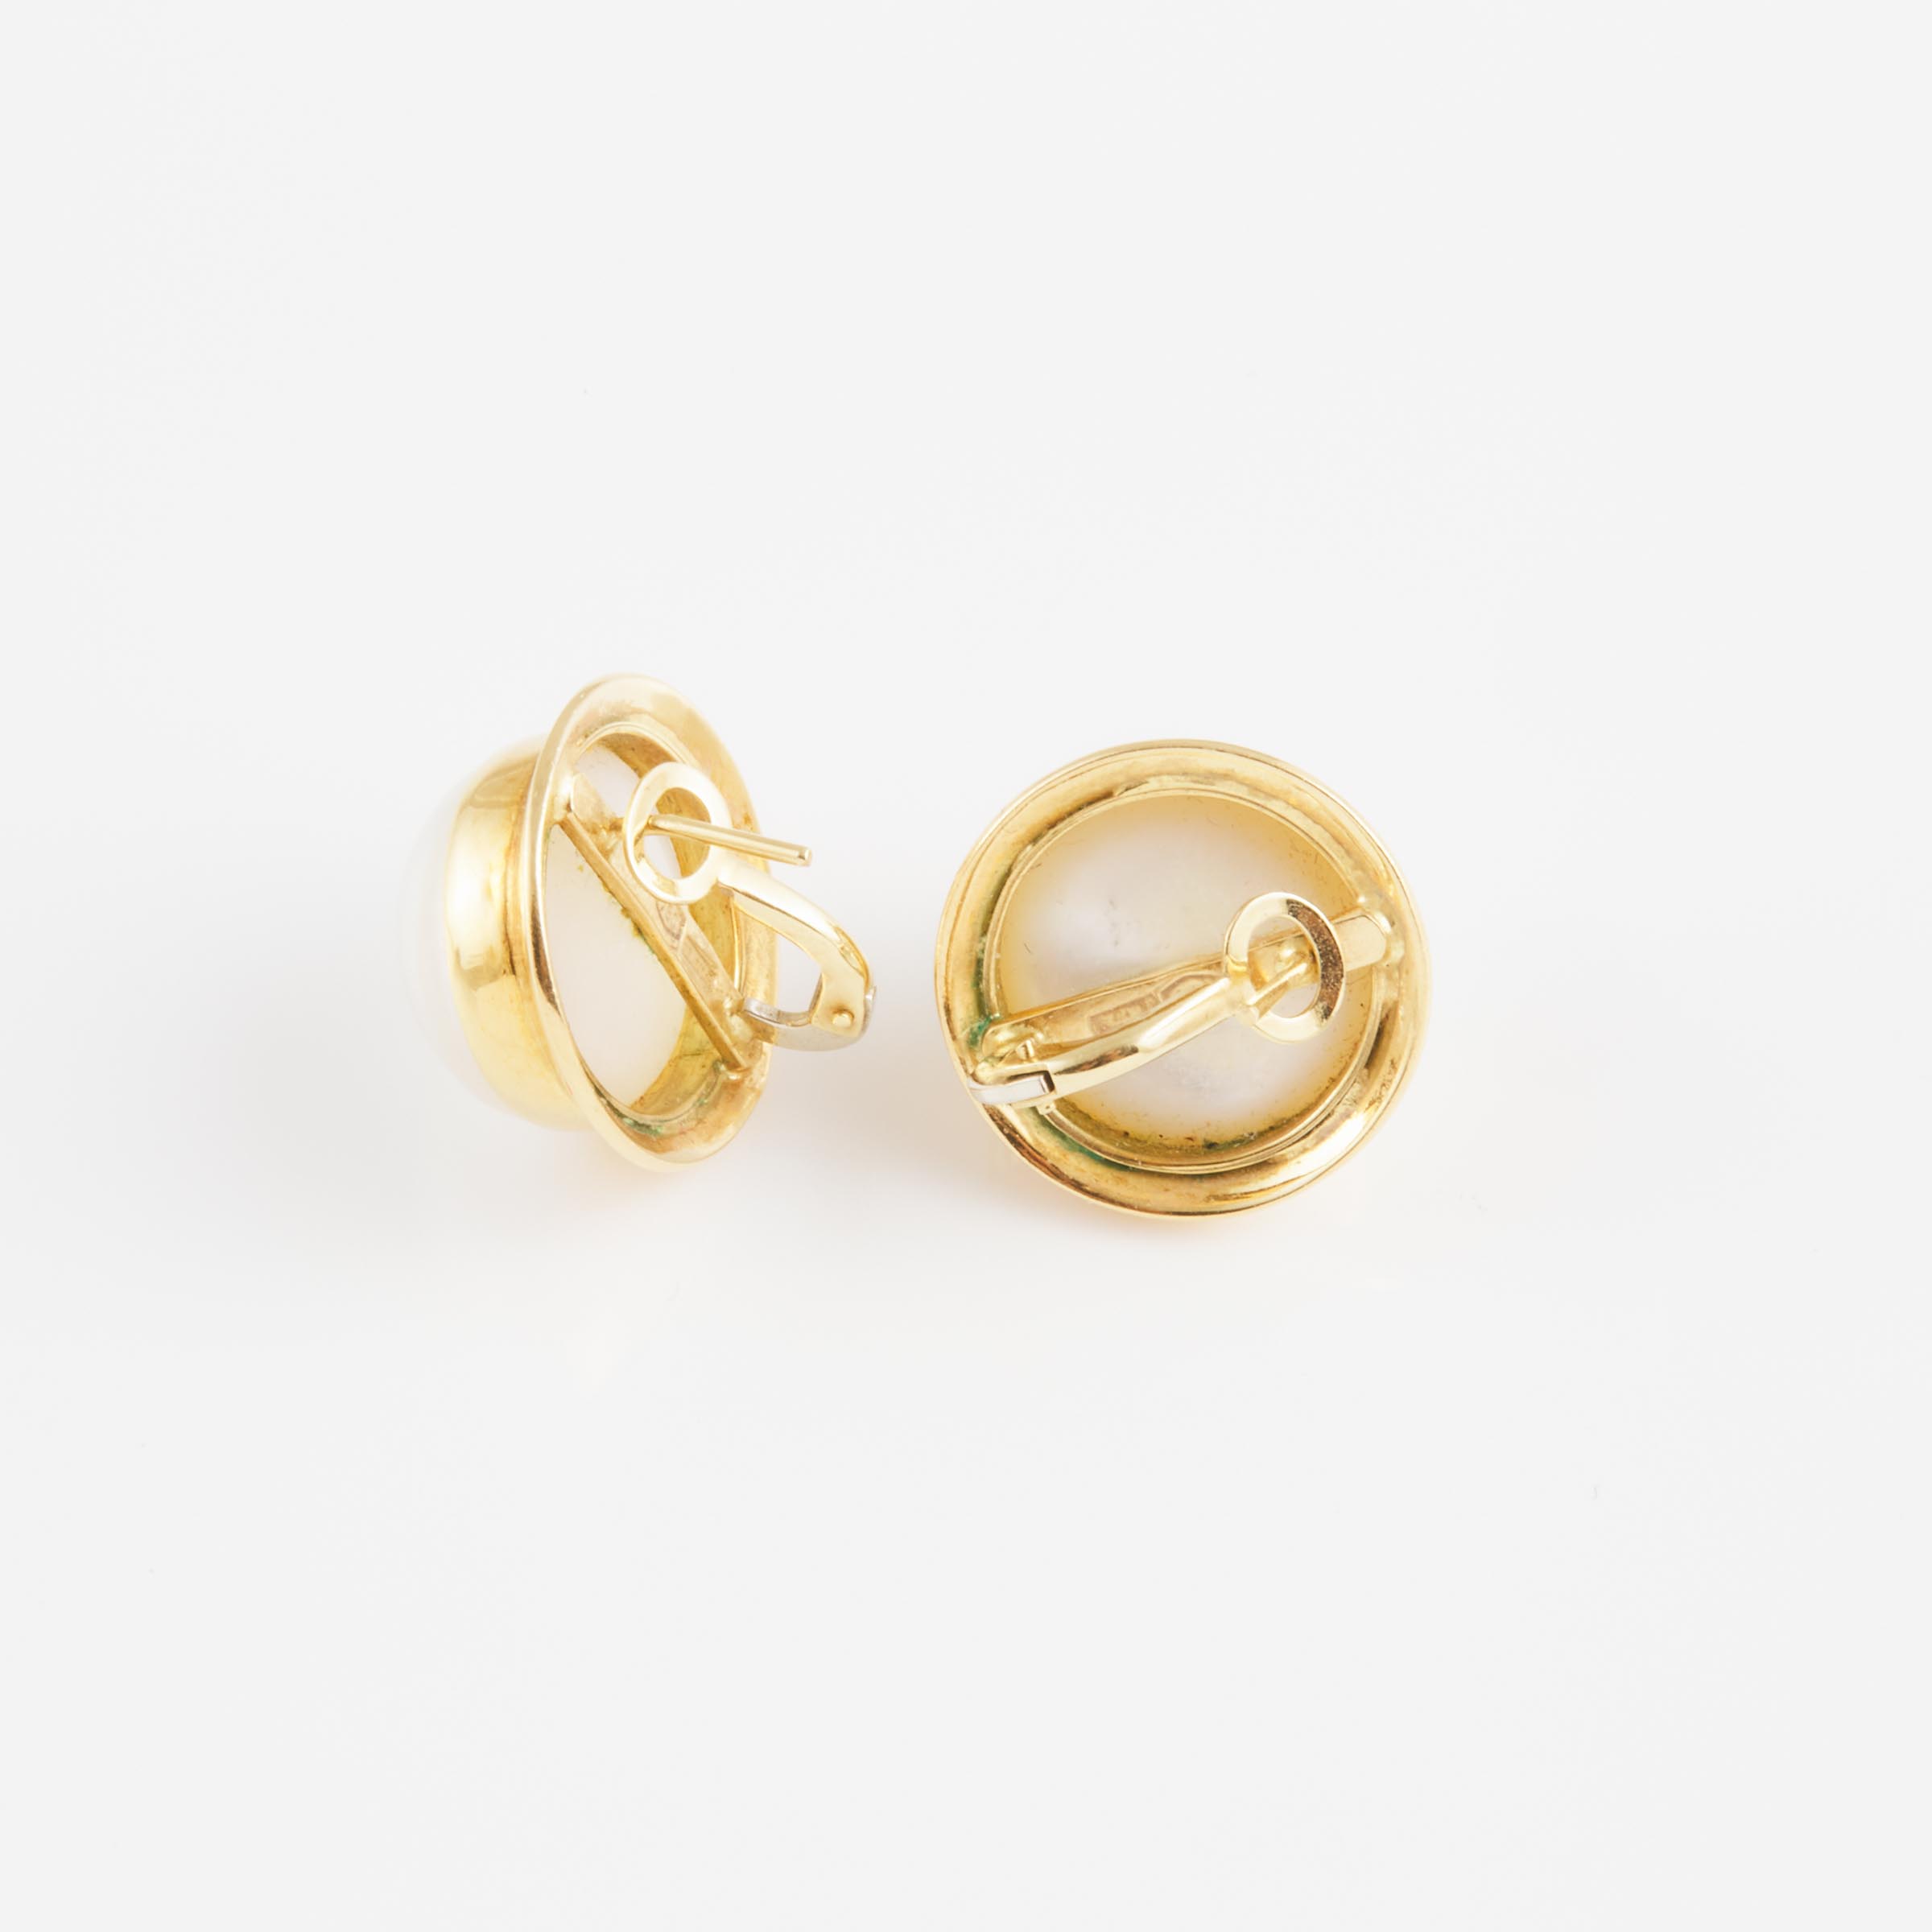 Pair Of Italian 18k Yellow Gold Button Earrings